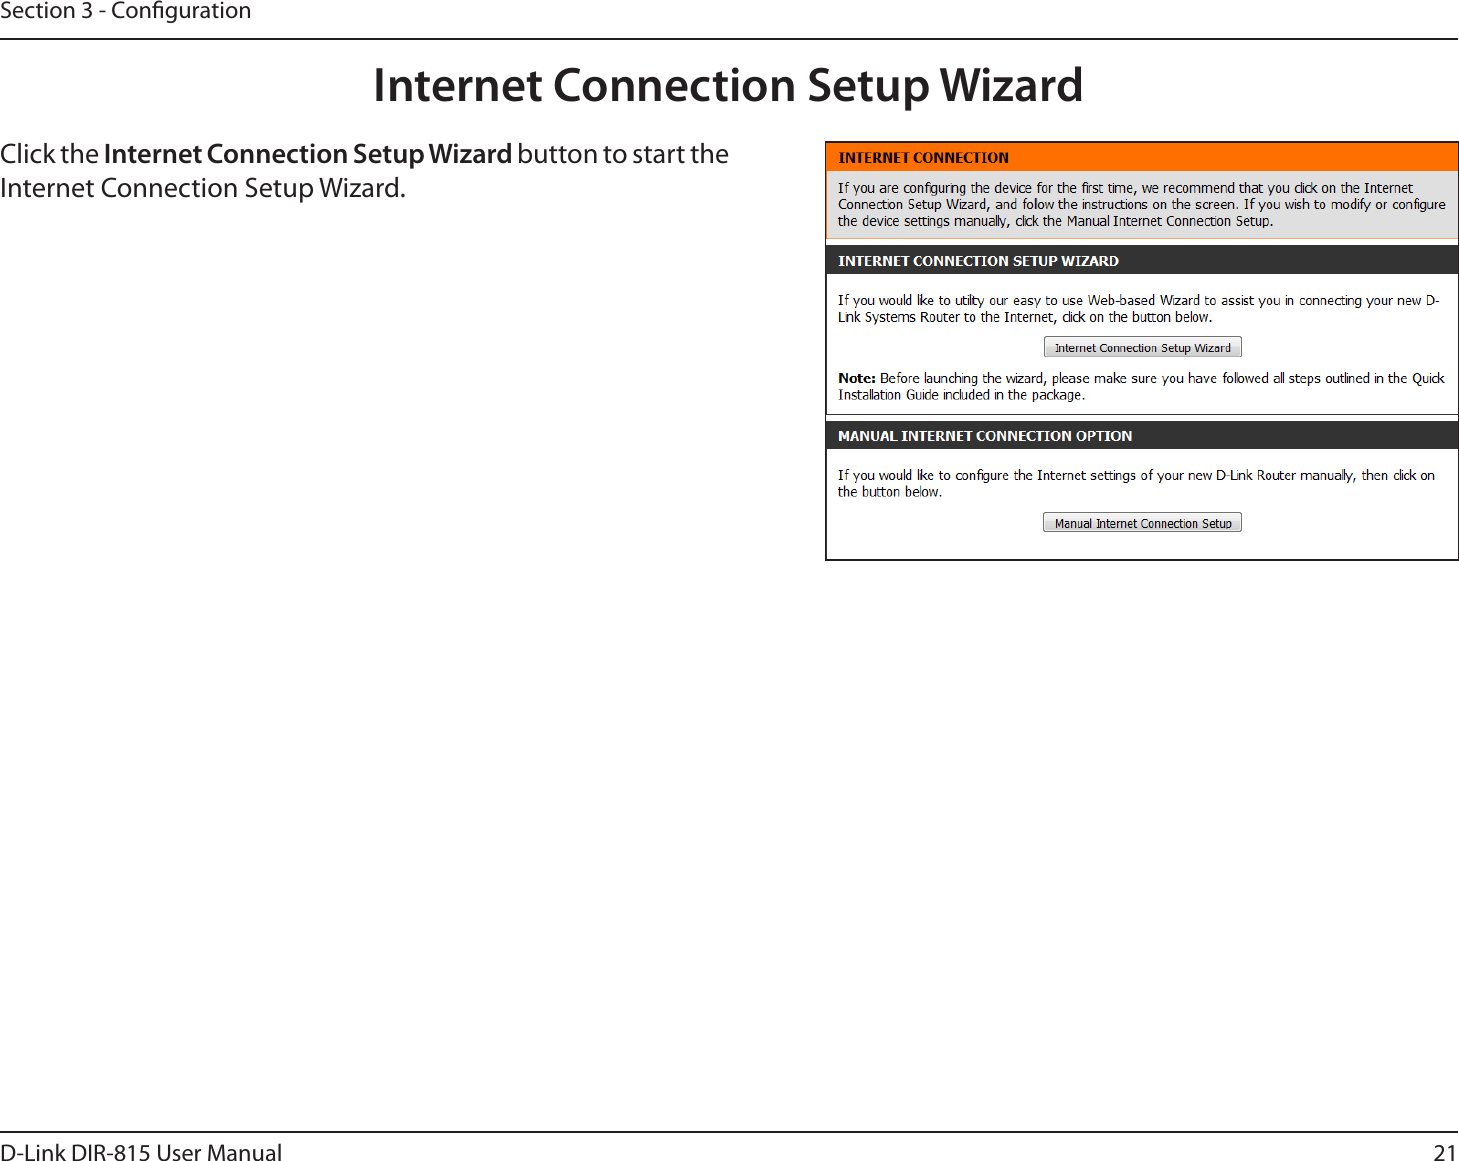 21D-Link DIR-815 User ManualSection 3 - CongurationInternet Connection Setup WizardClick the Internet Connection Setup Wizard button to start the Internet Connection Setup Wizard.